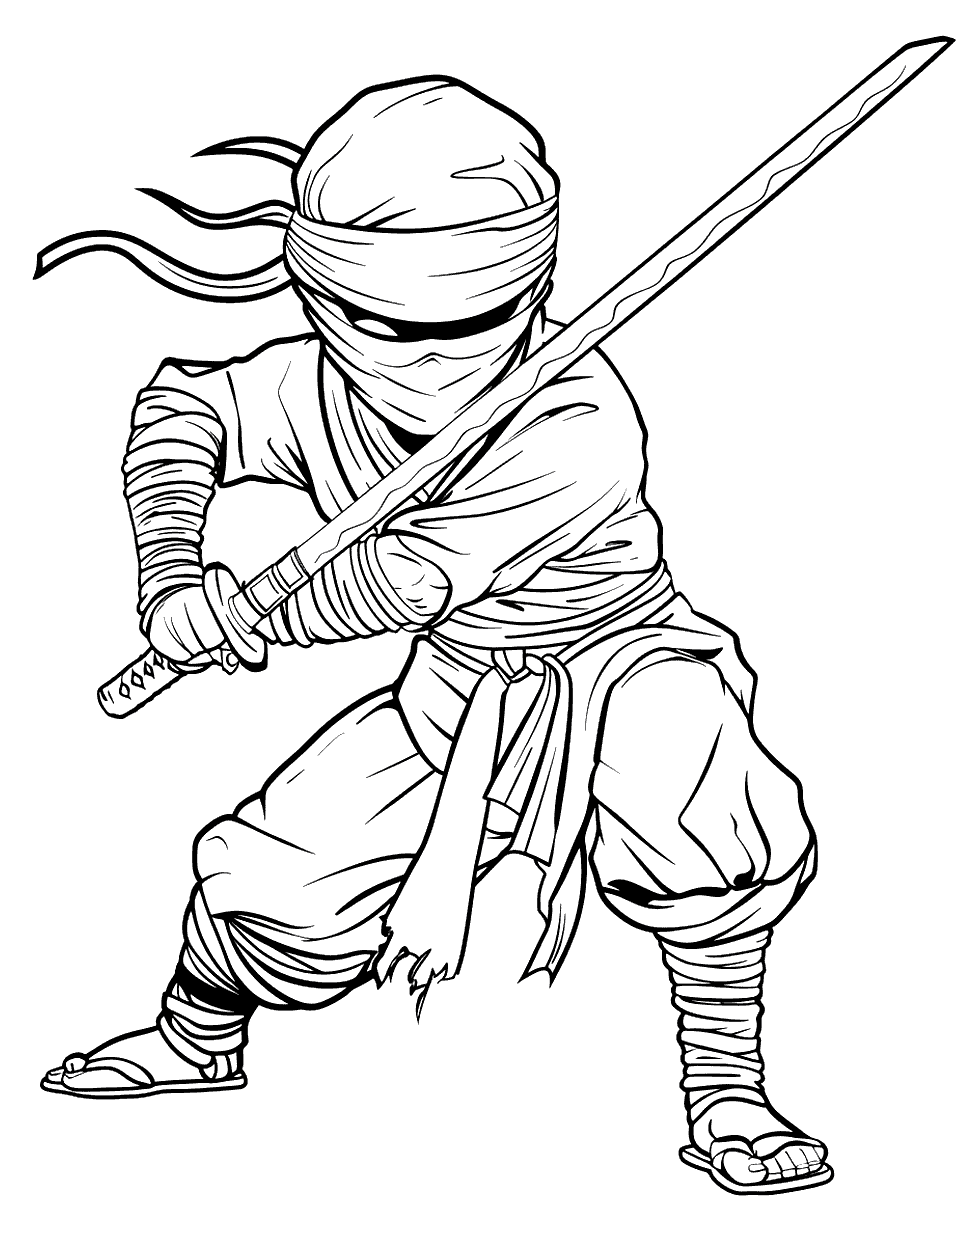 Ninja with a Shining Katana Coloring Page - A ninja holding a katana that has the moonlight power in it.